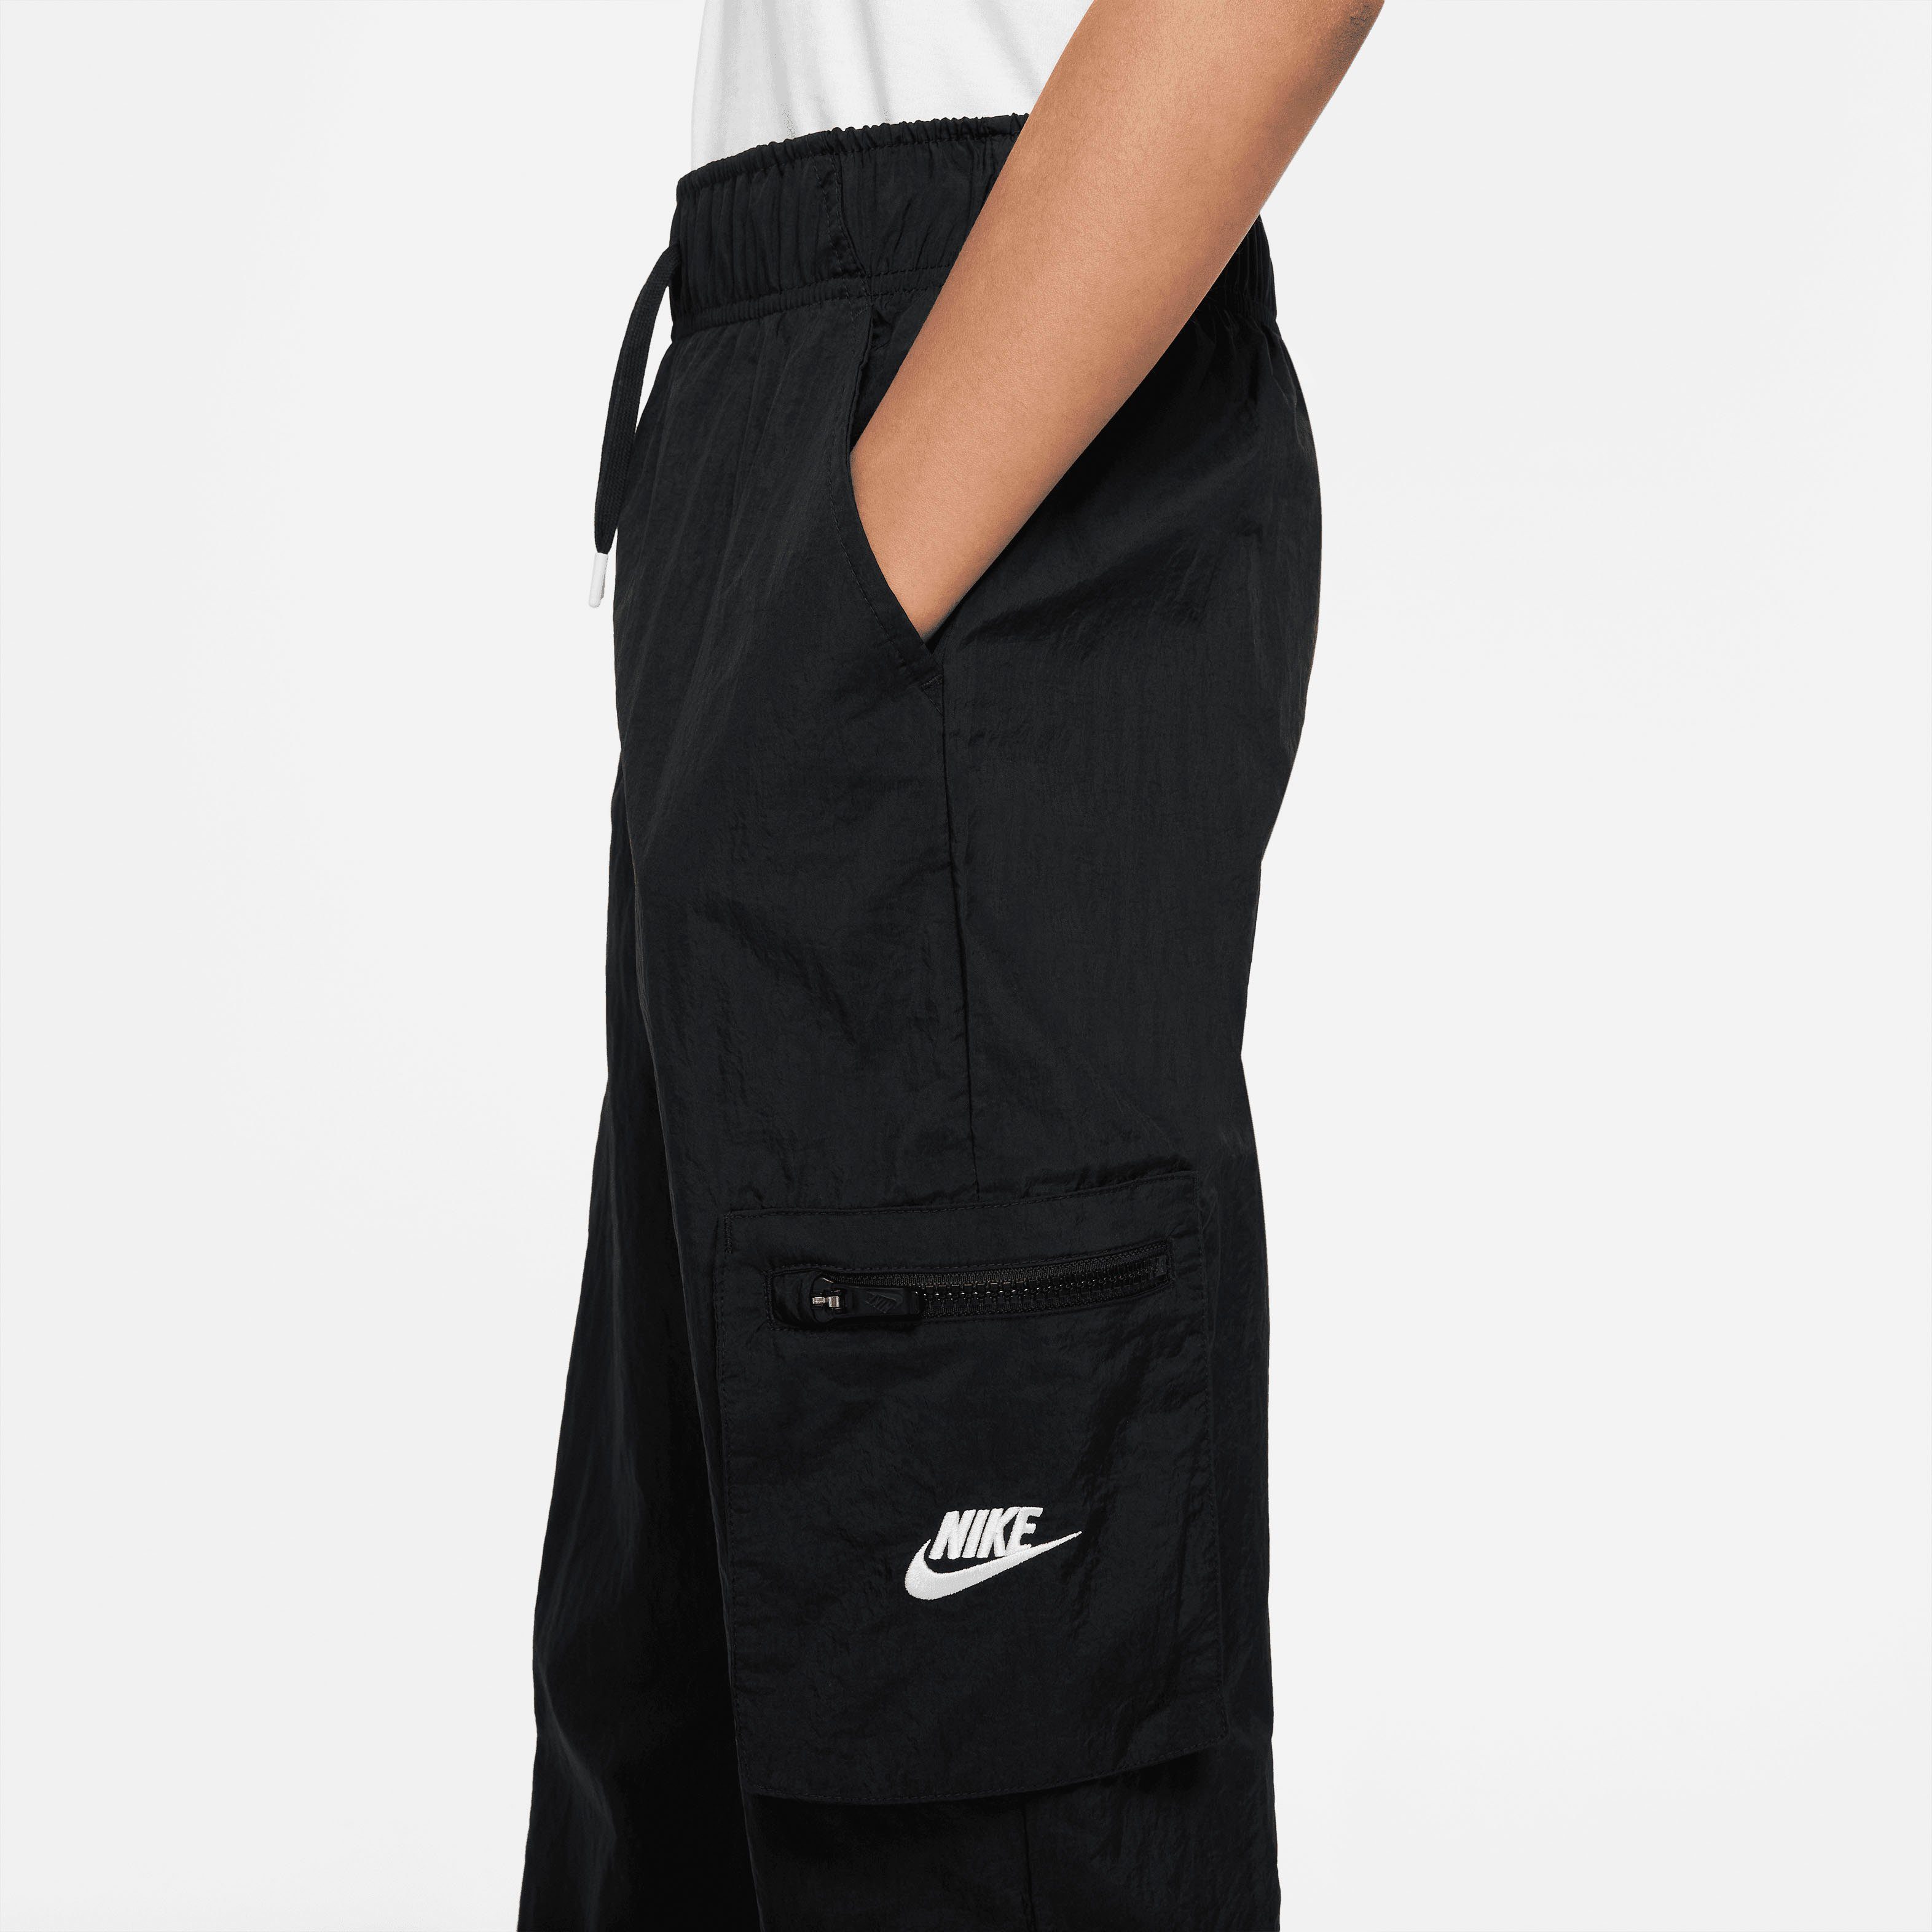 Big Nike Woven Cargo BLACK/WHITE Pants Kids' (Girls) Sportswear Sporthose